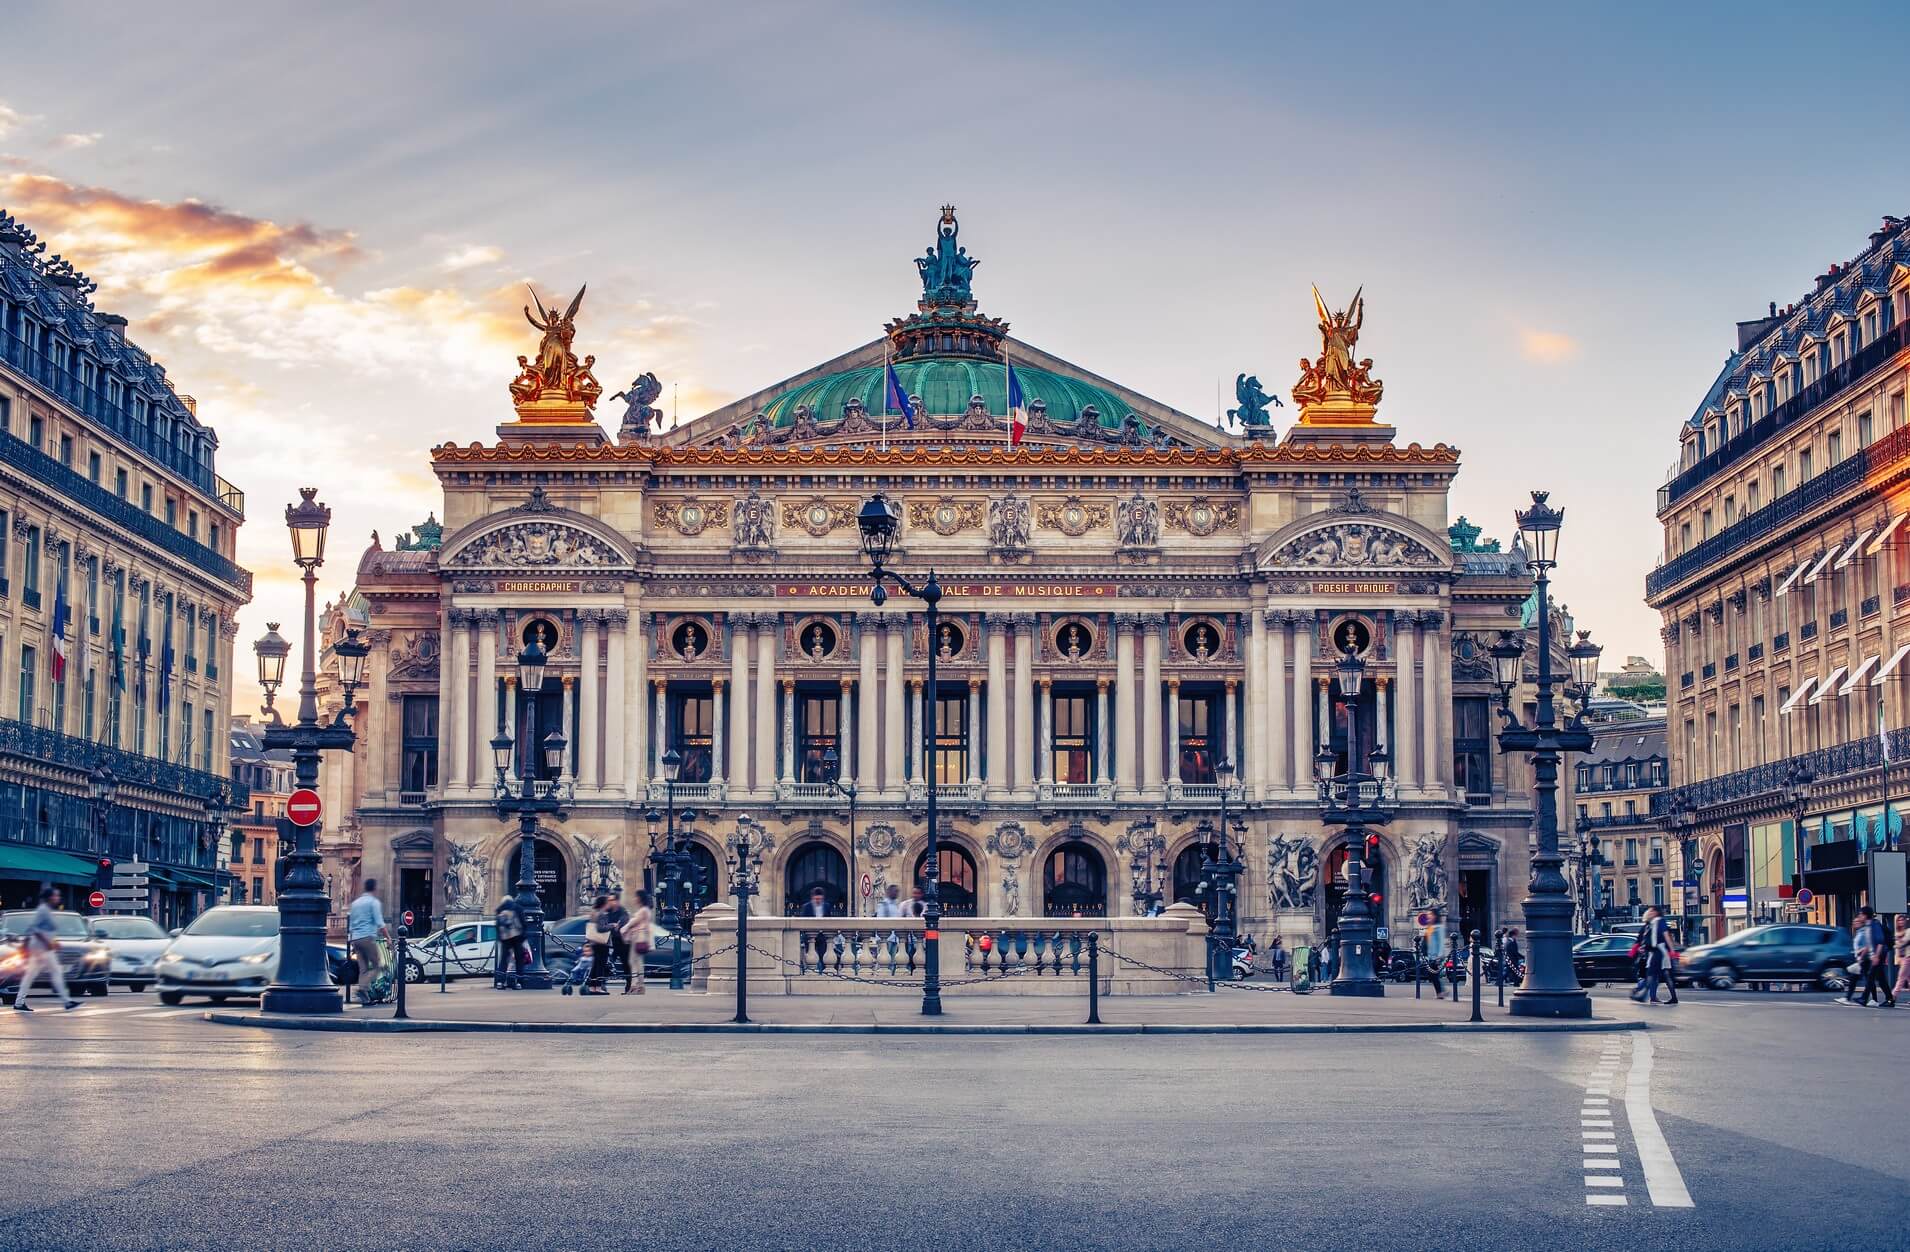 Opera Garnier (Palais Garnier, Opera paryska) - cennik, opis, zdjęcia